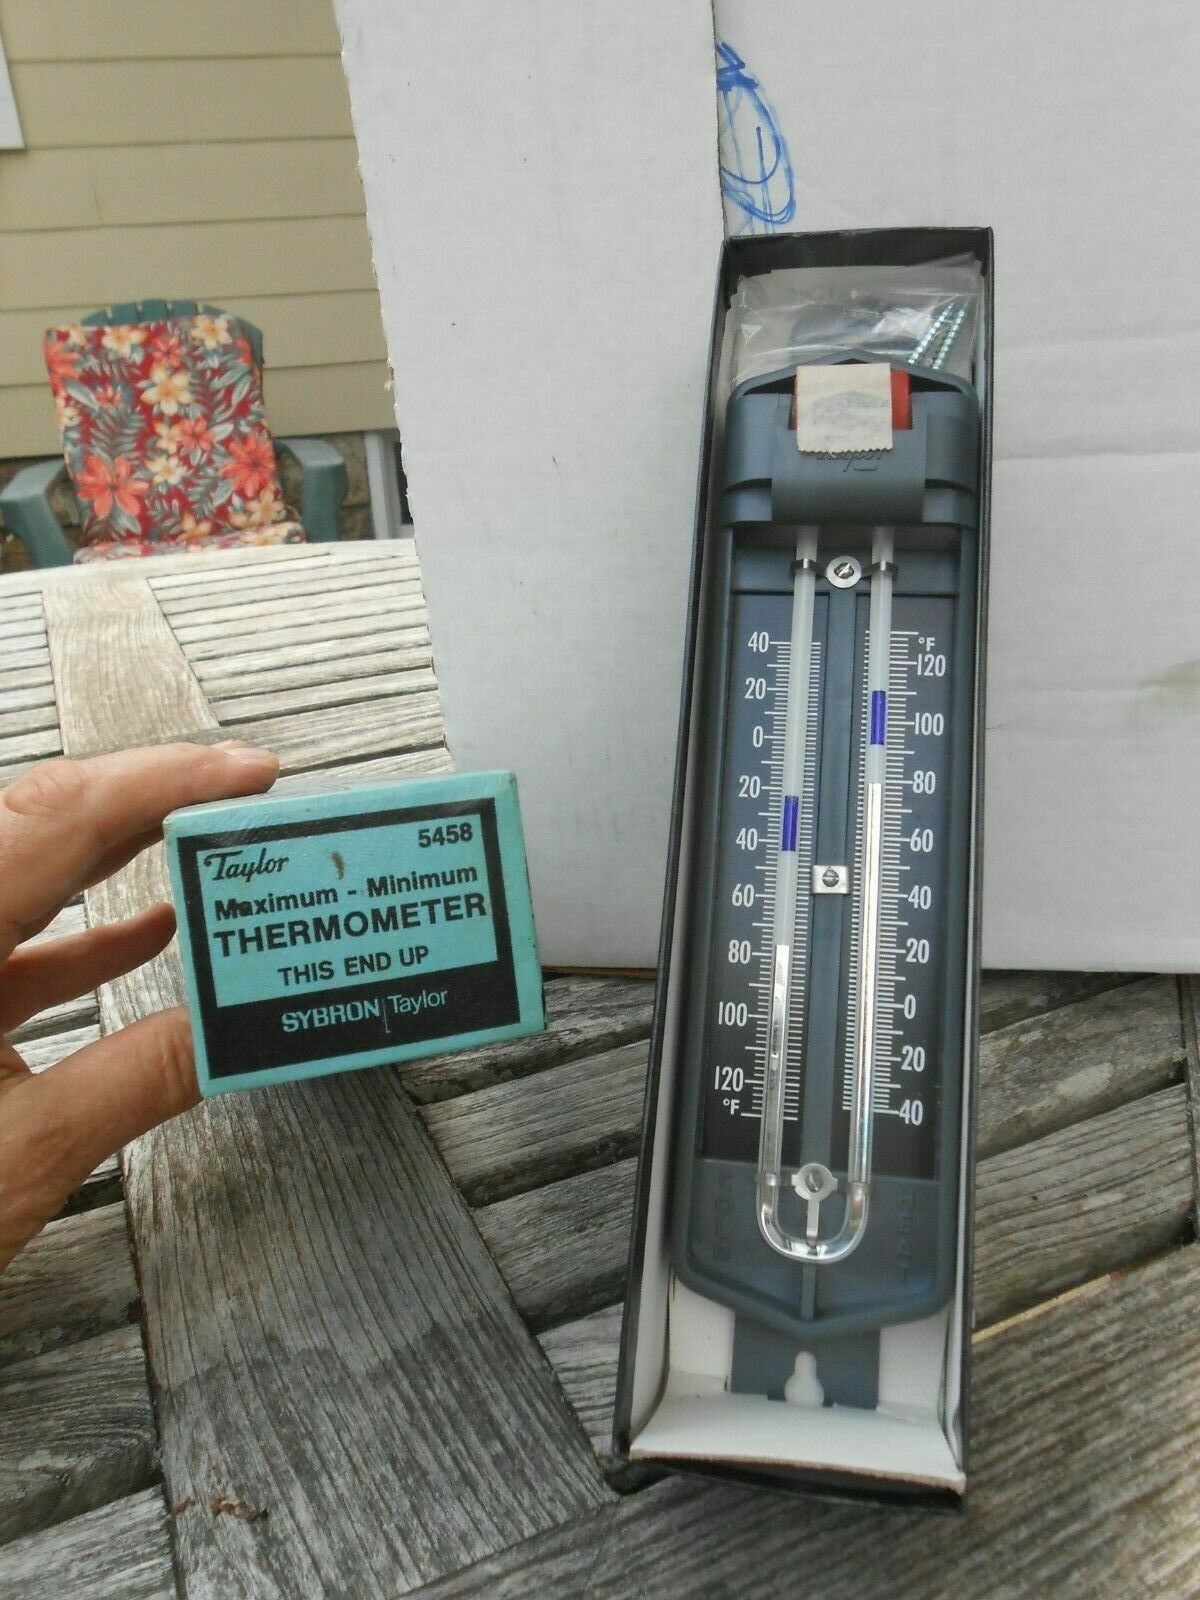 Taylor No. 5458 Maximum-mimimum (low) Self Registering Thermometer, New Open Box